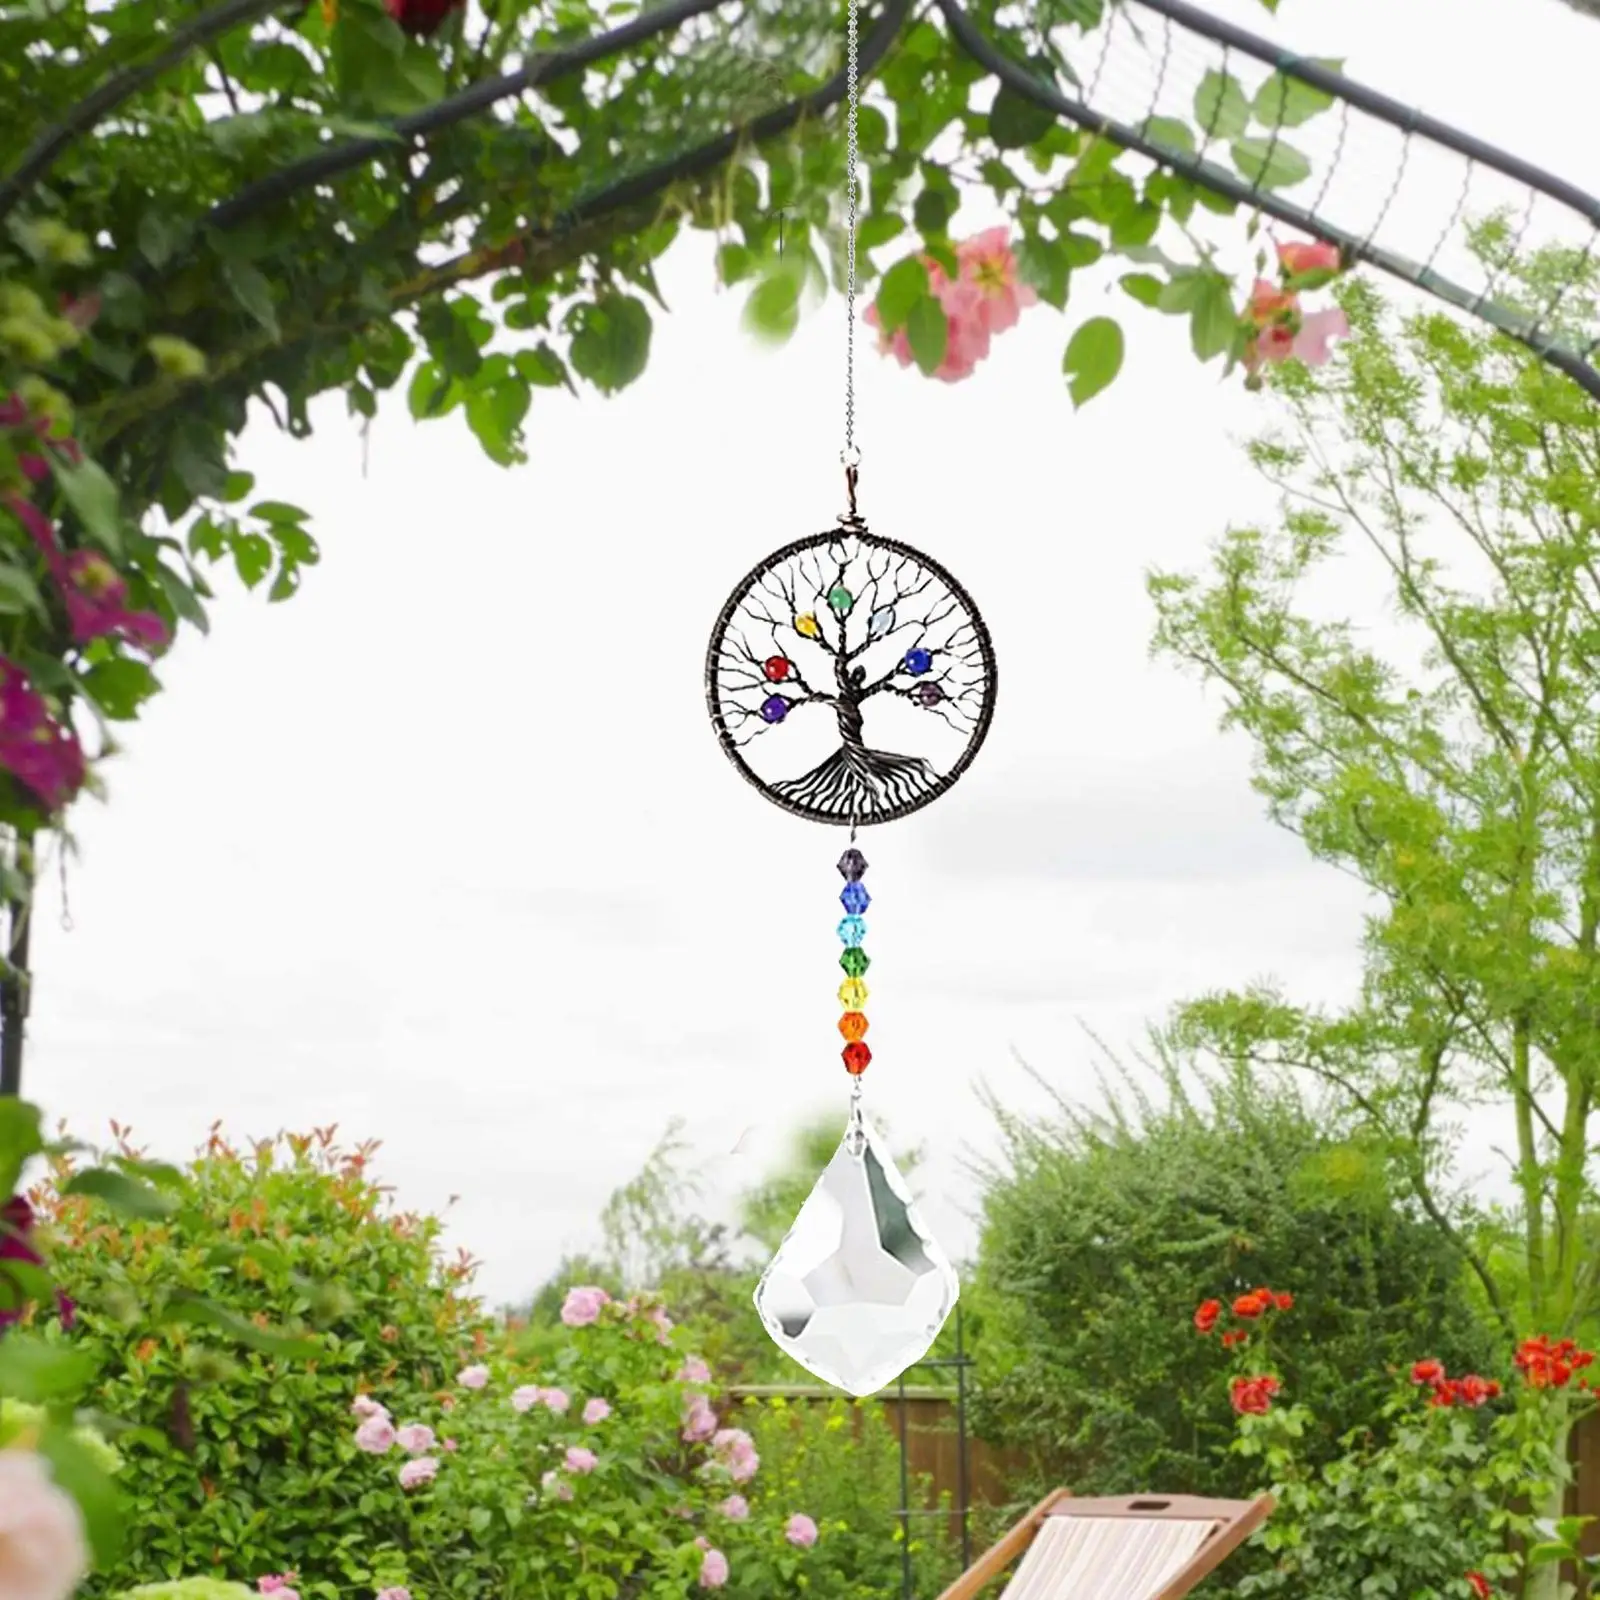 Crystal Rainbow Maker Hanging Window Pendant Home Garden Decor